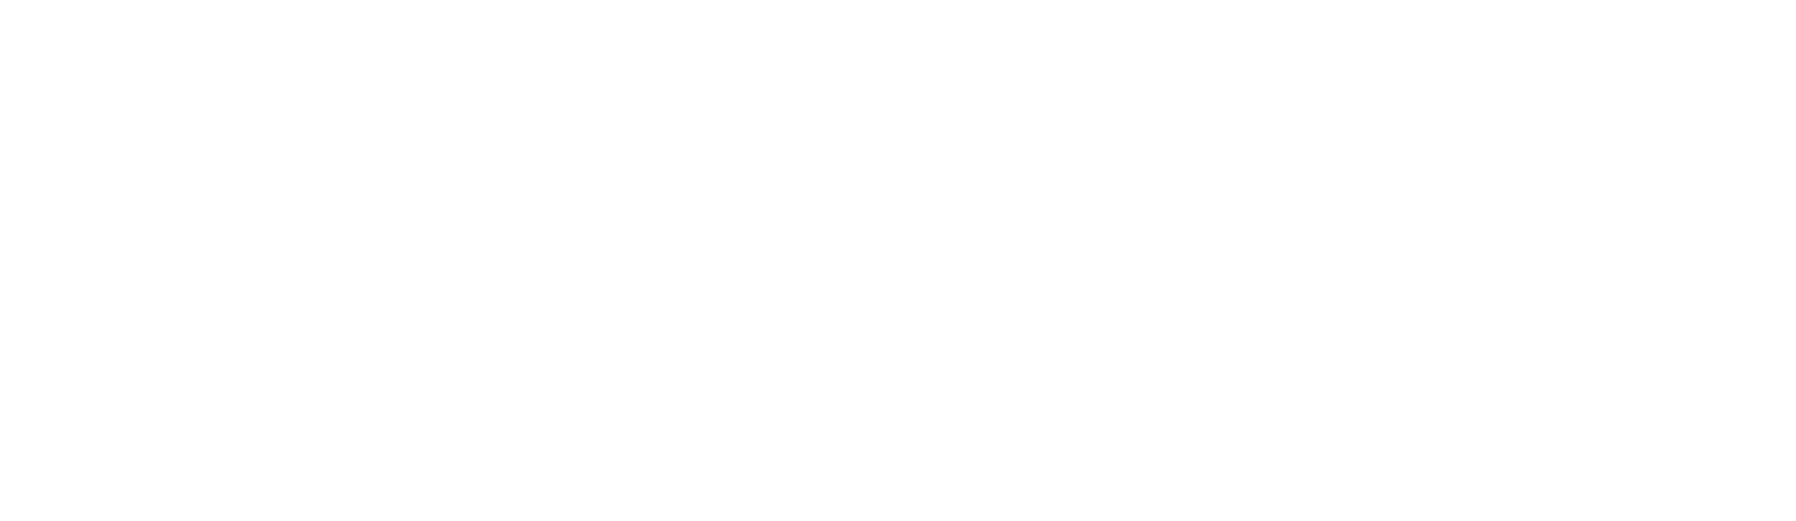 Zizr Logo White New